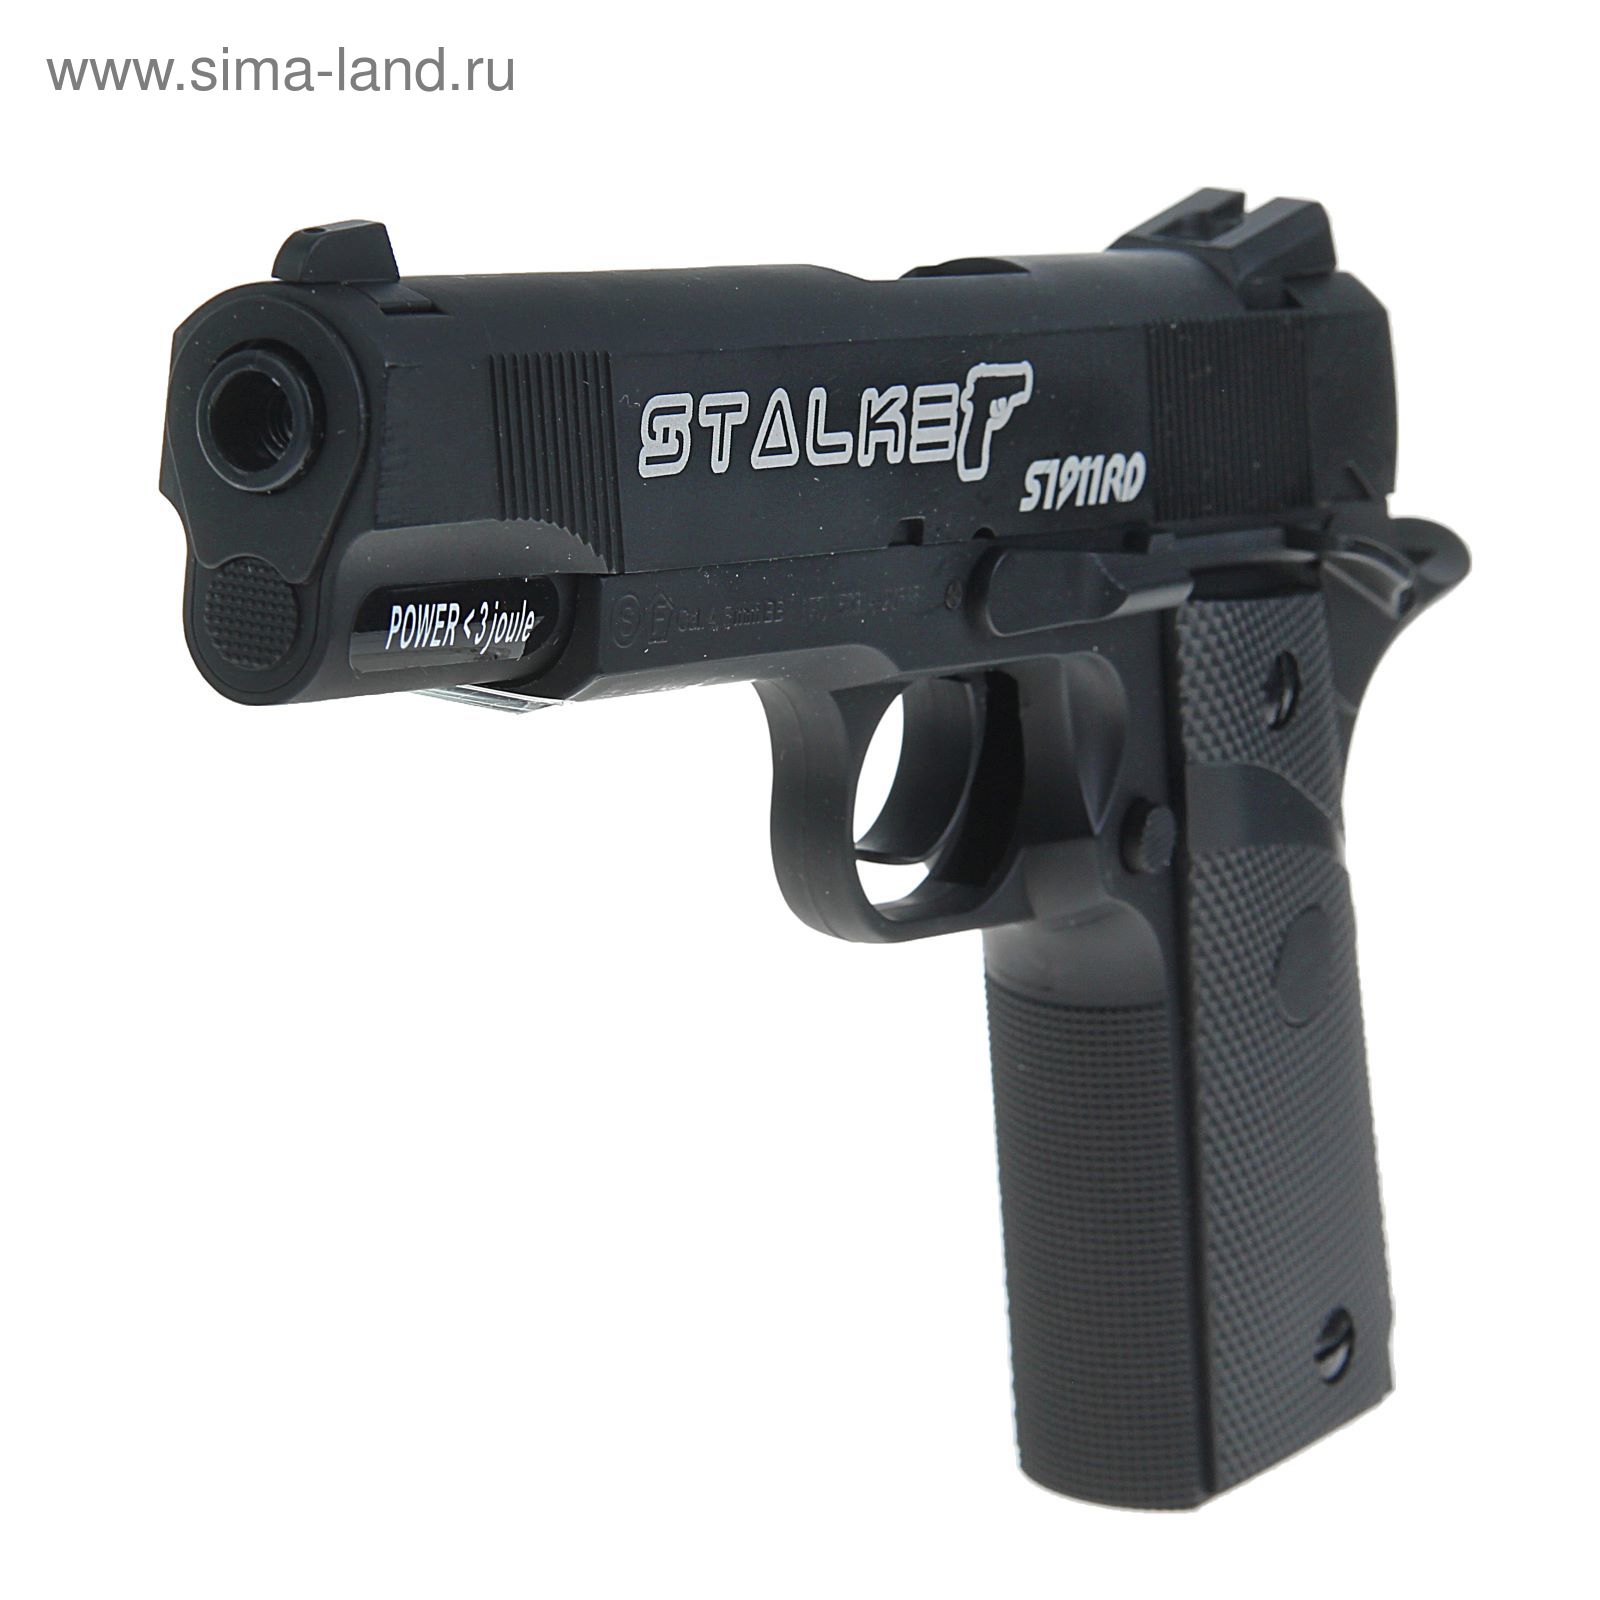 Пистолет пневматический Stalker S1911RD  4,5мм, металл-пластик